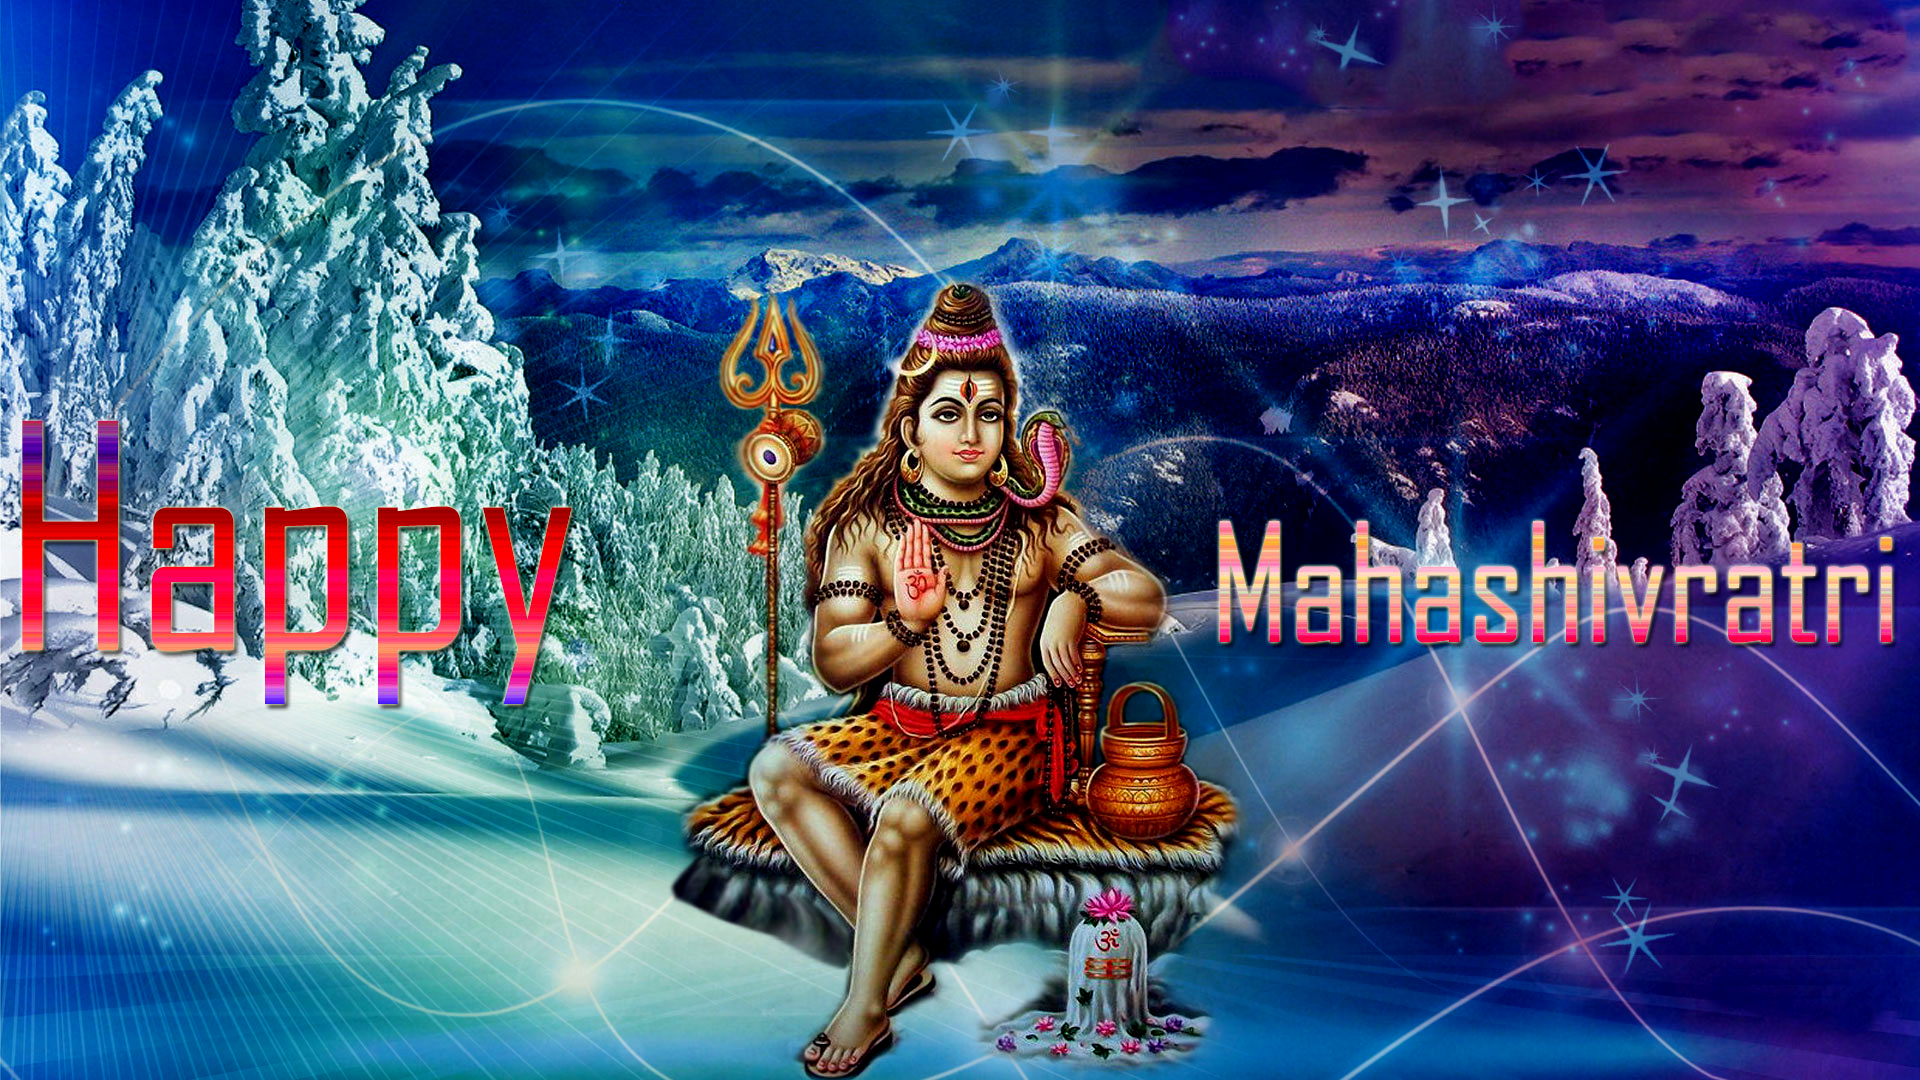 3500 Maha Shivaratri Stock Photos Pictures  RoyaltyFree Images   iStock  Shiva posture Tears of shiva Taj mahal